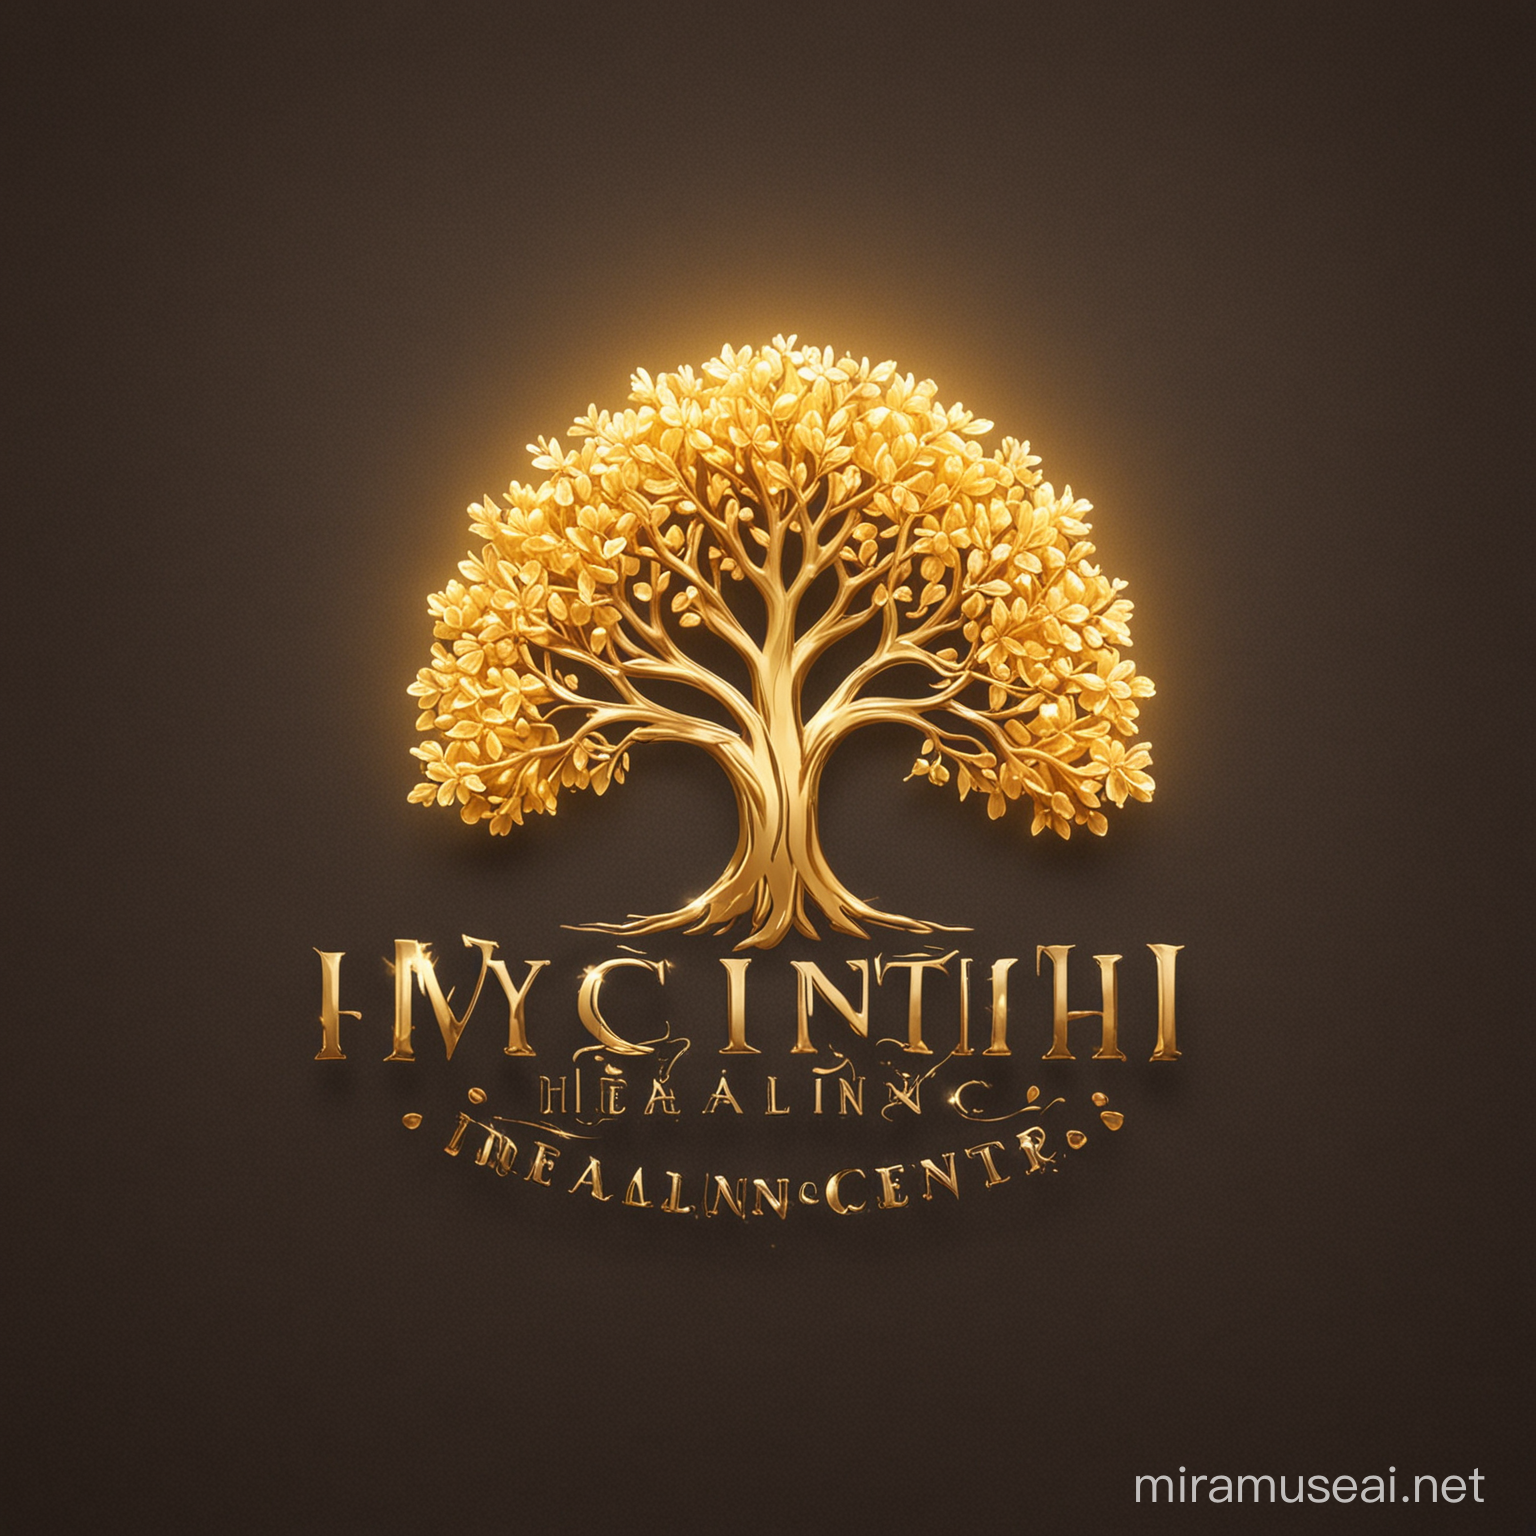 Glowing Golden Light Tree Logo for Hyacinth Healing Center PLLC